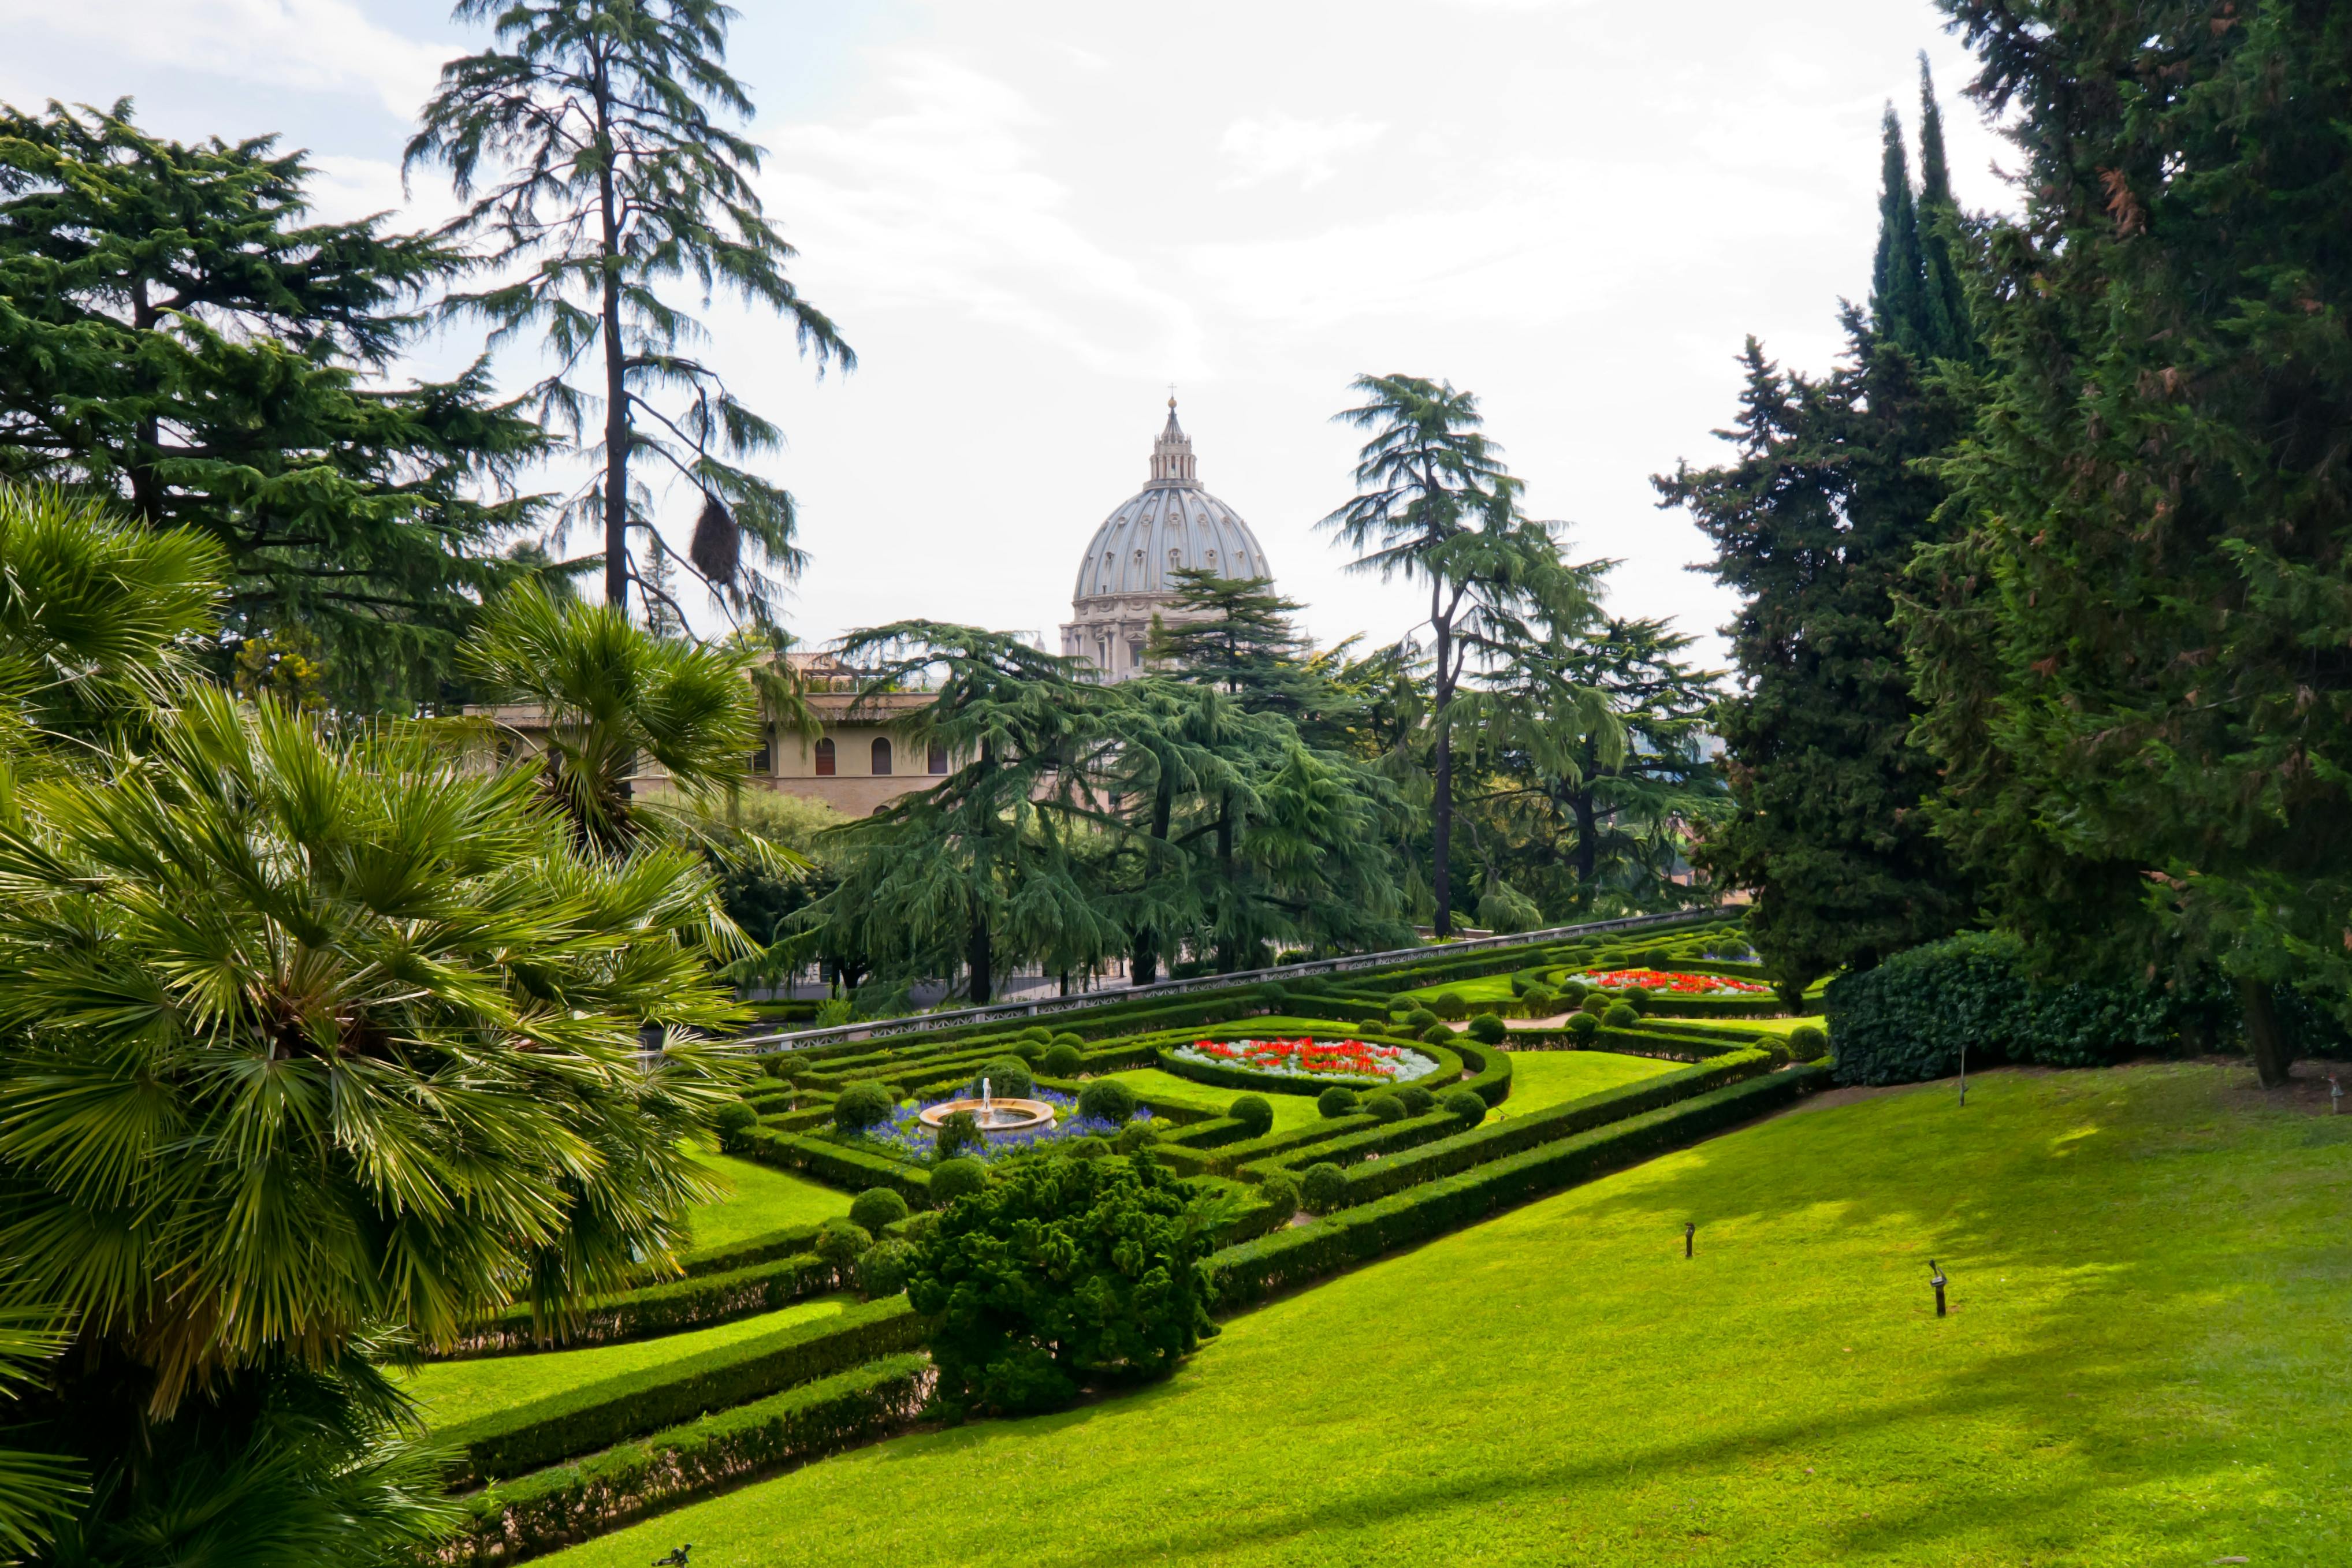 Vatican Gardens open bus tour, Vatican Museums and Sistine Chapel